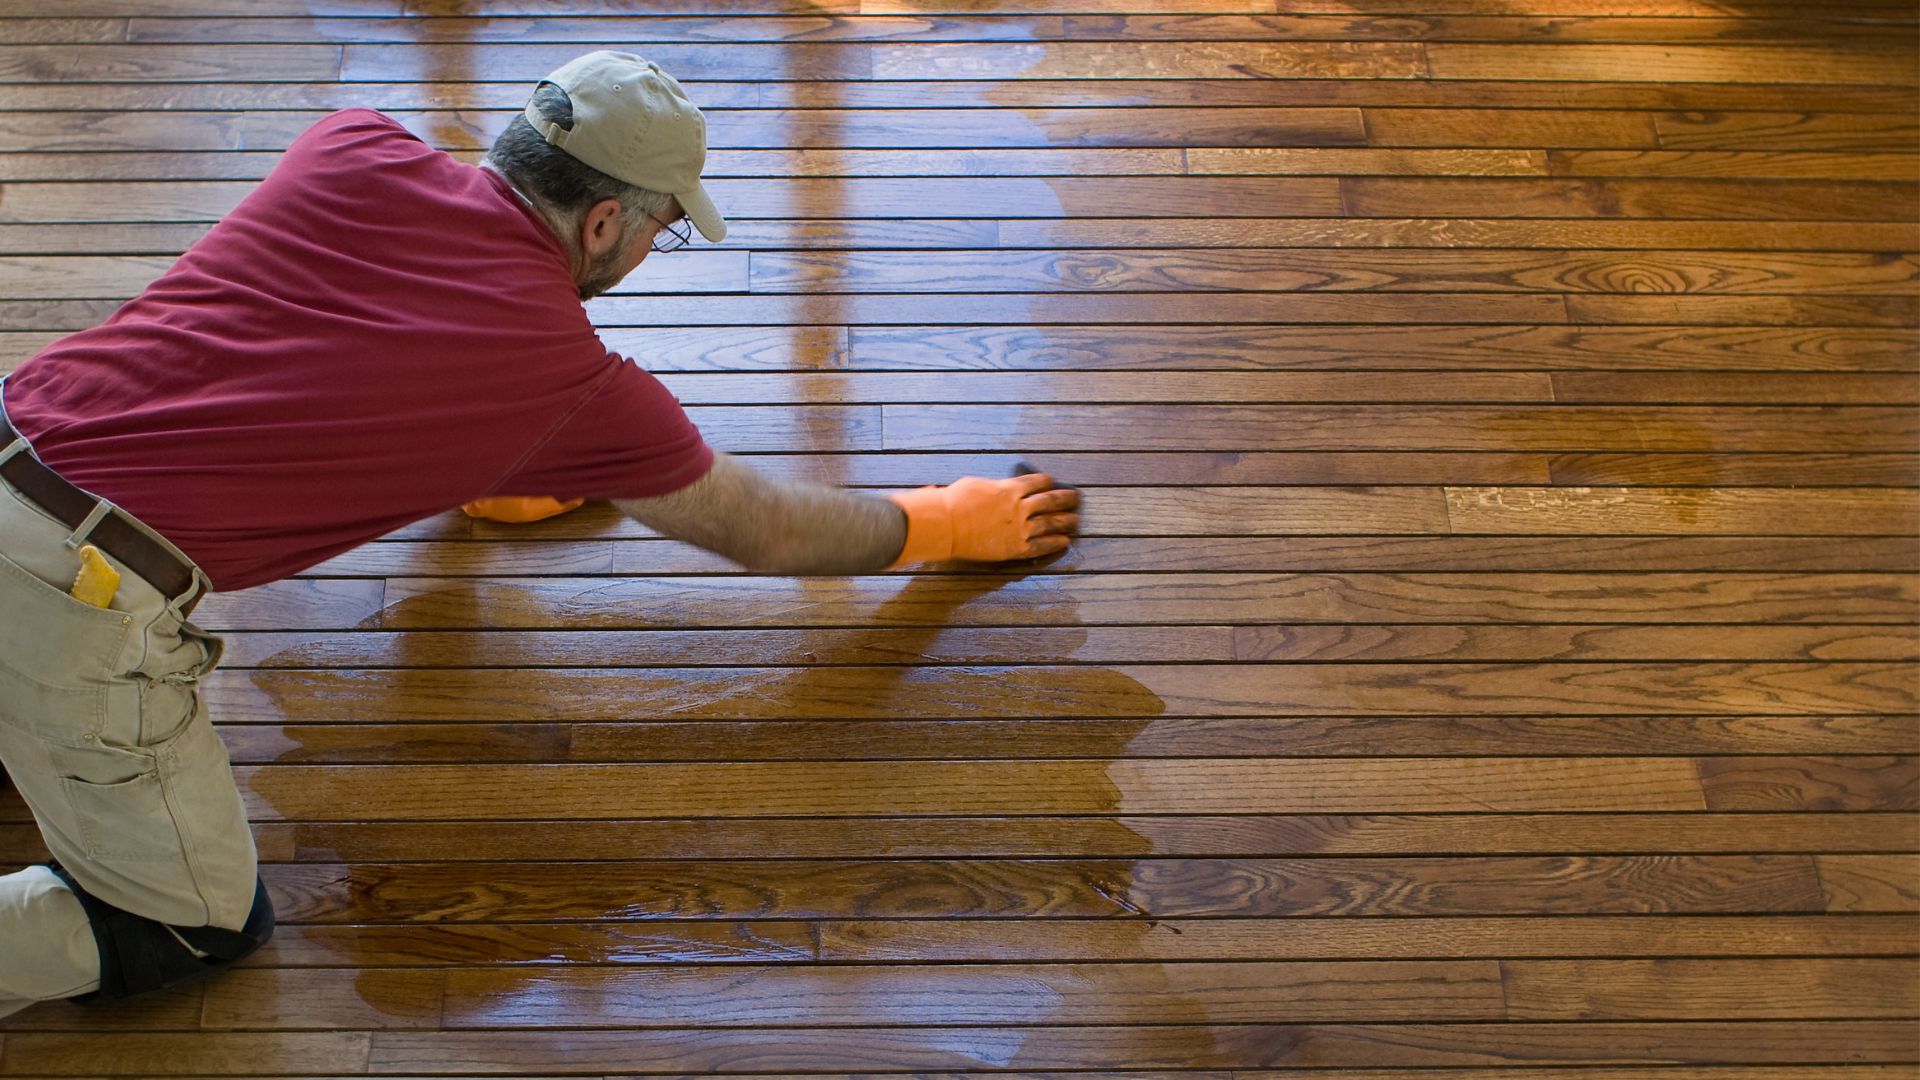 Sanding hardwood floors in Arlington, VA